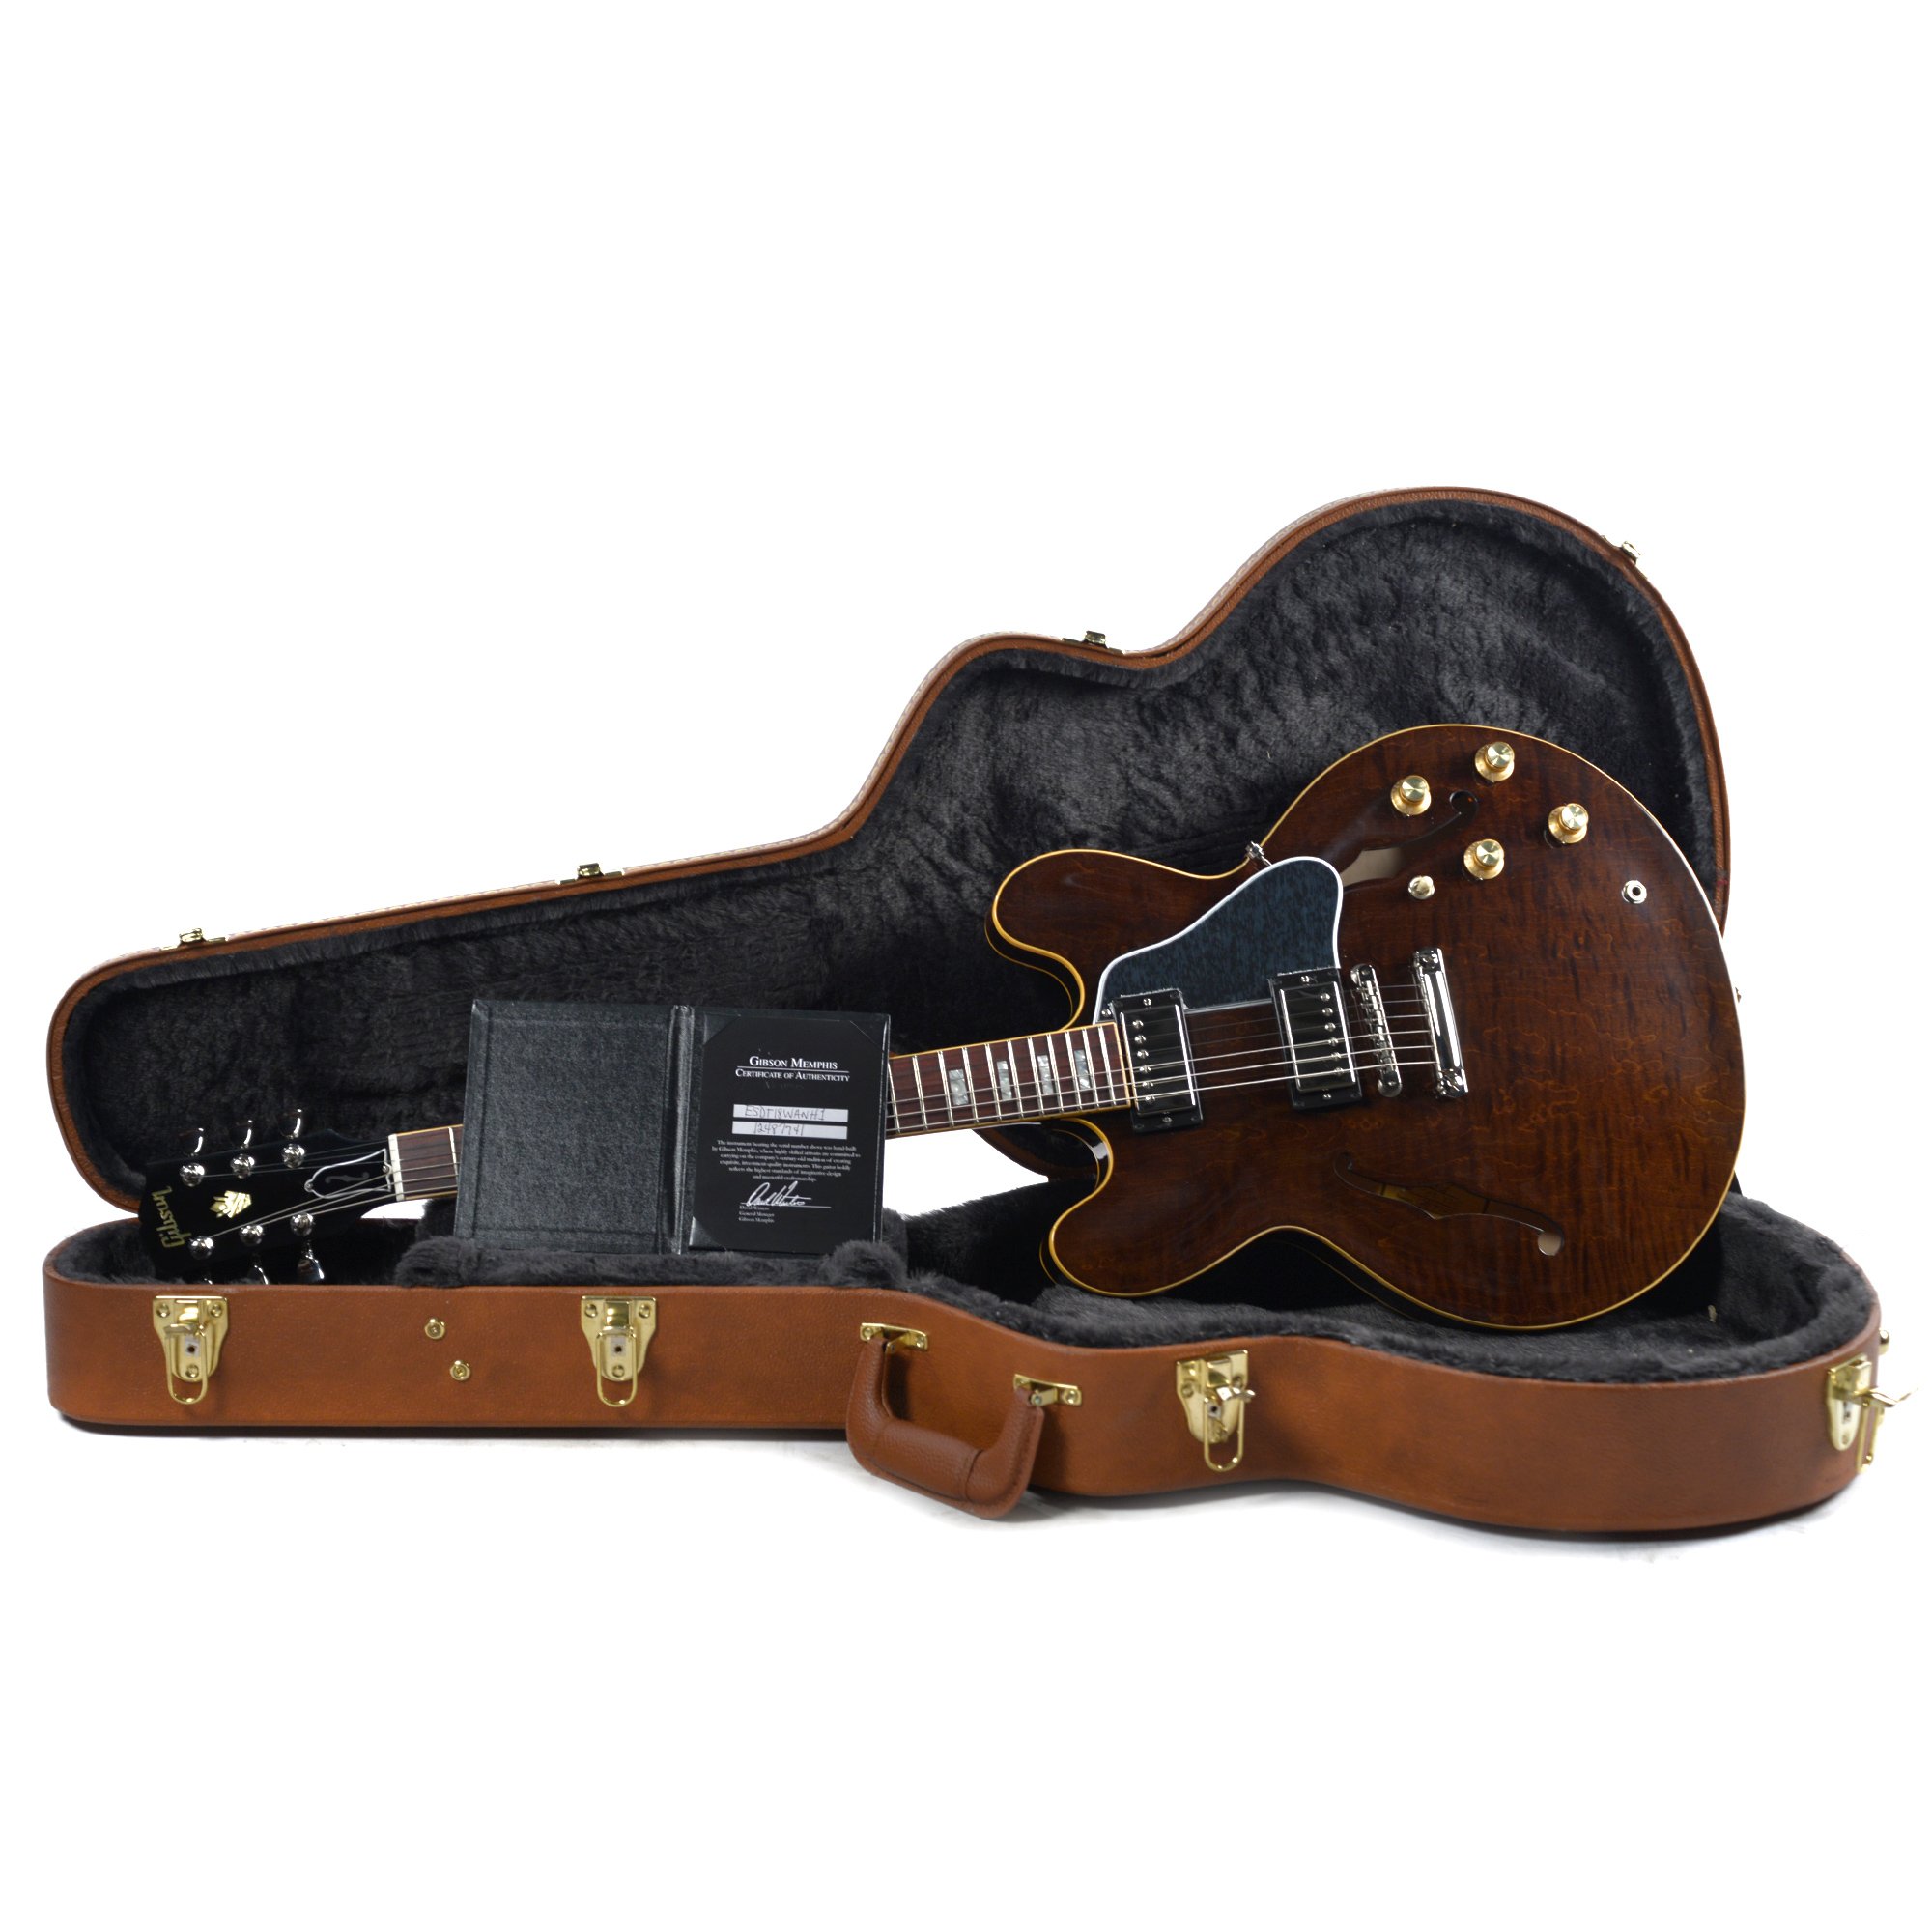 Gibson Es-335 Figured 2018 Ltd - Antique Walnut - Semi-hollow electric guitar - Variation 5